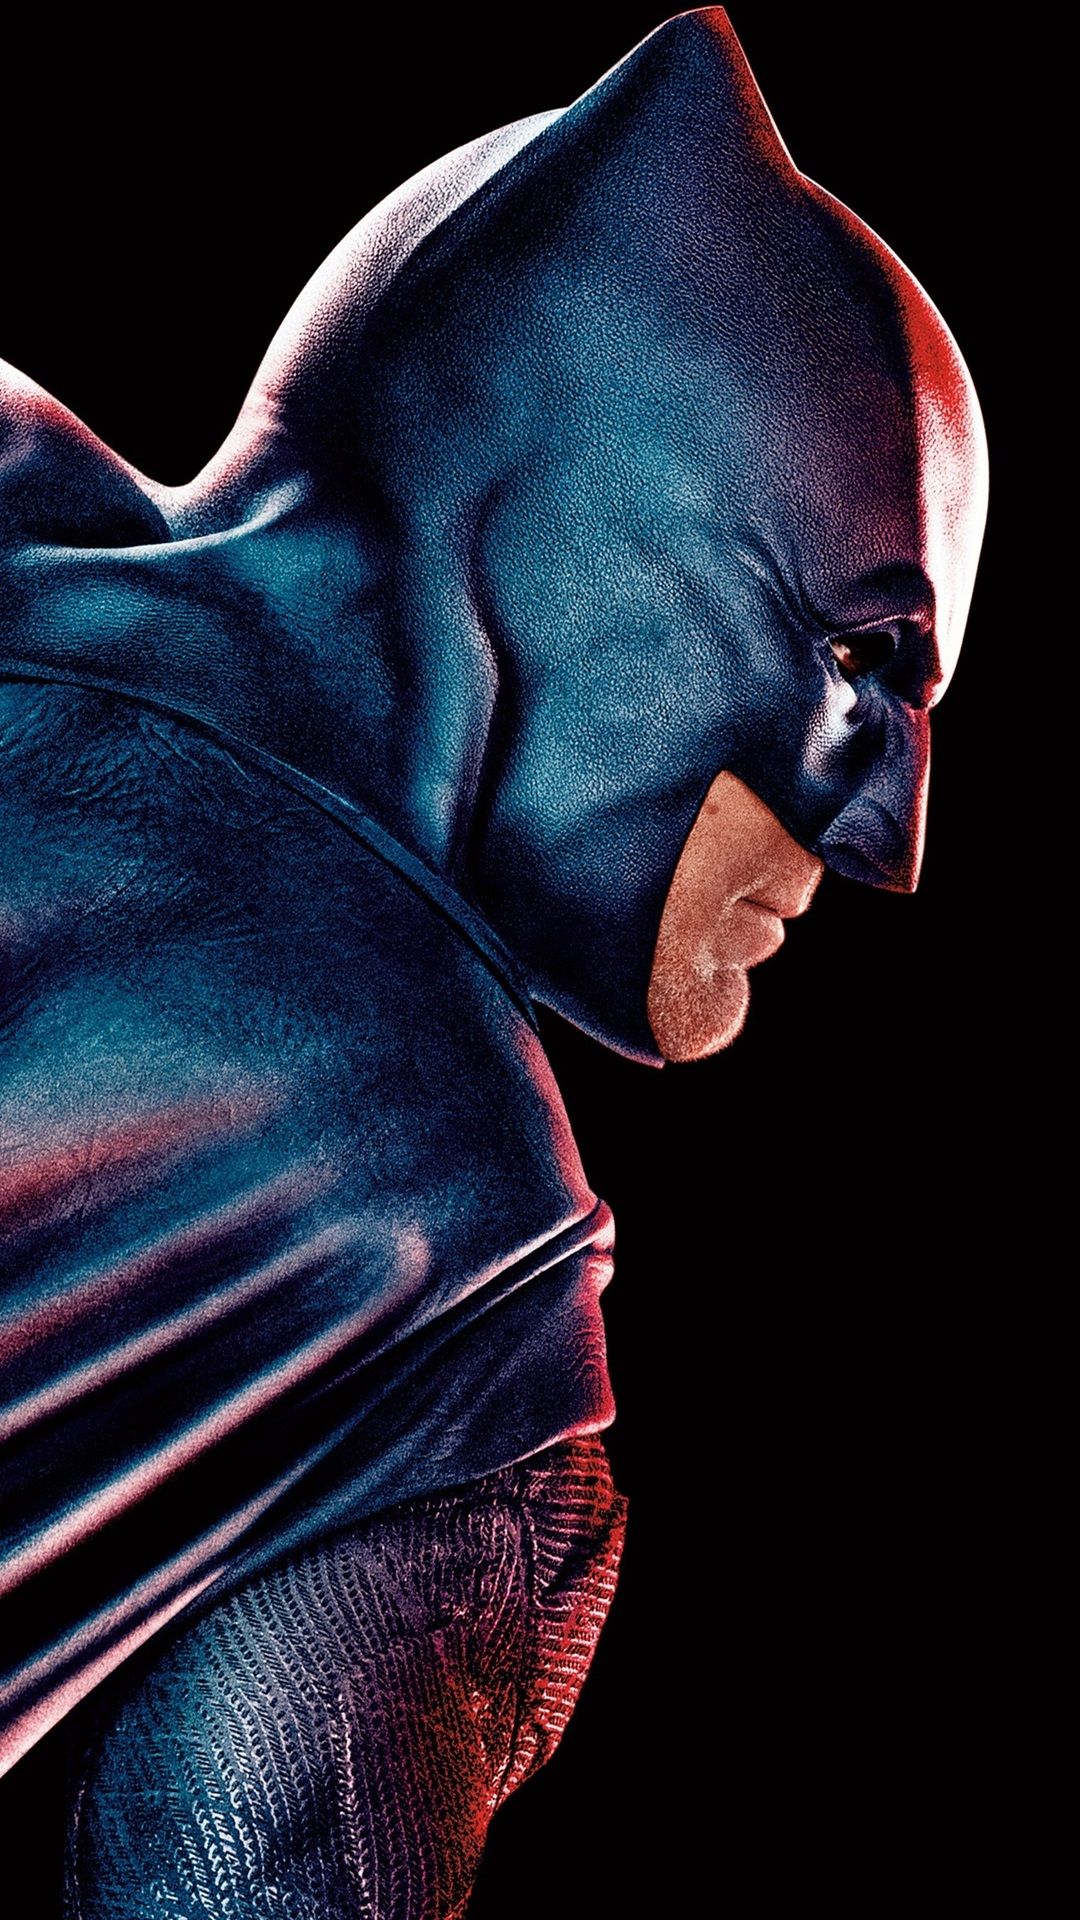 Batman Justice League Poster 2017 Wallpapers